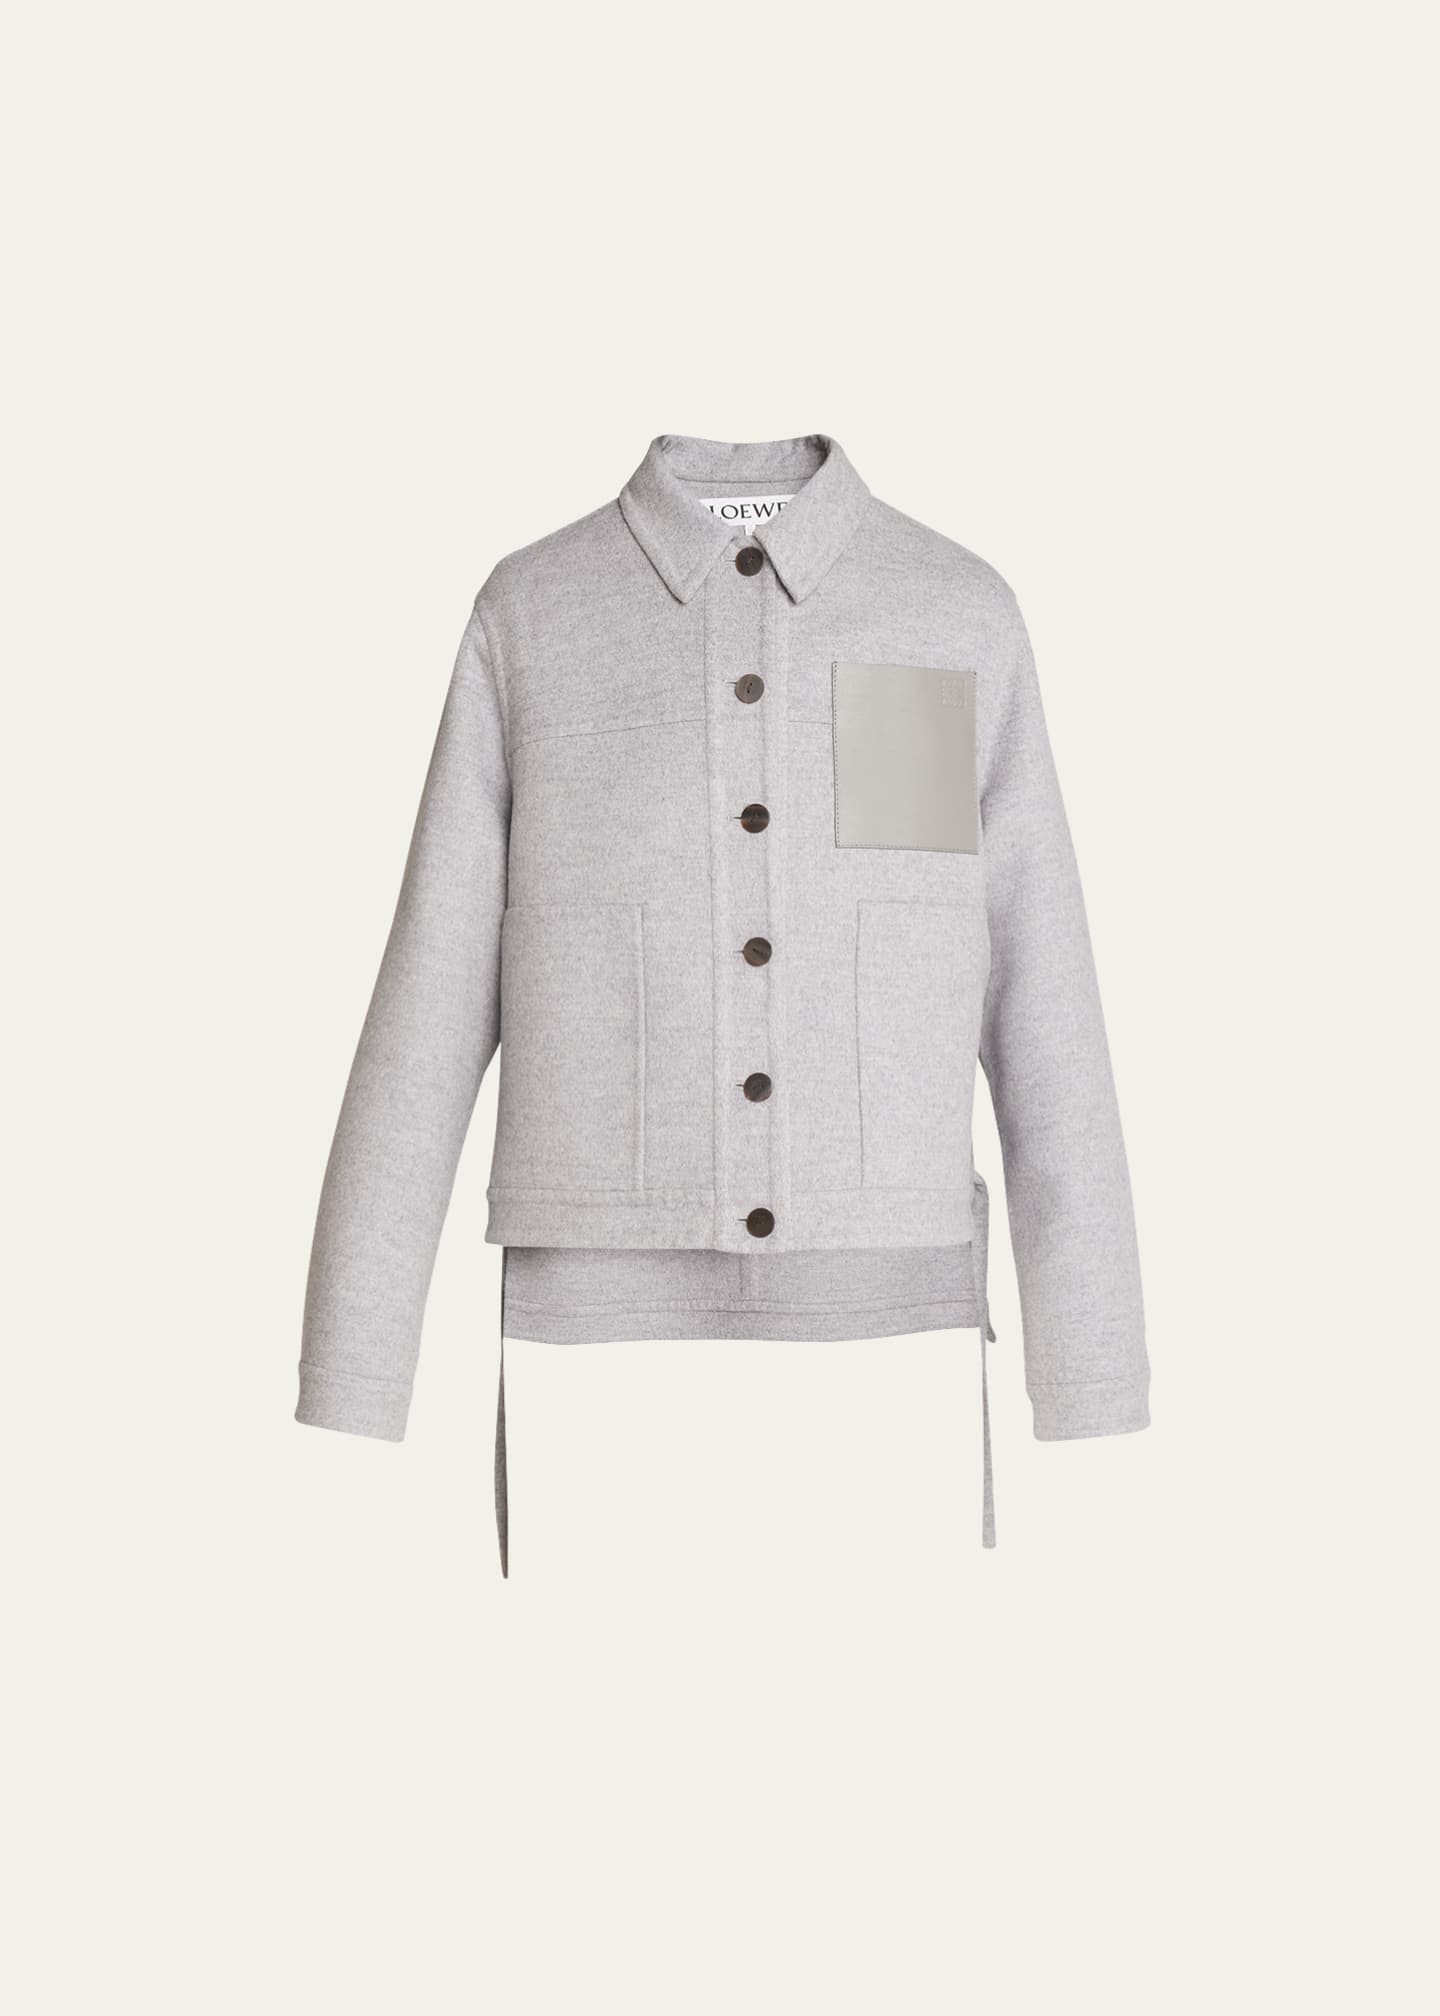 Loewe Men's Anagram Workwear Jacket